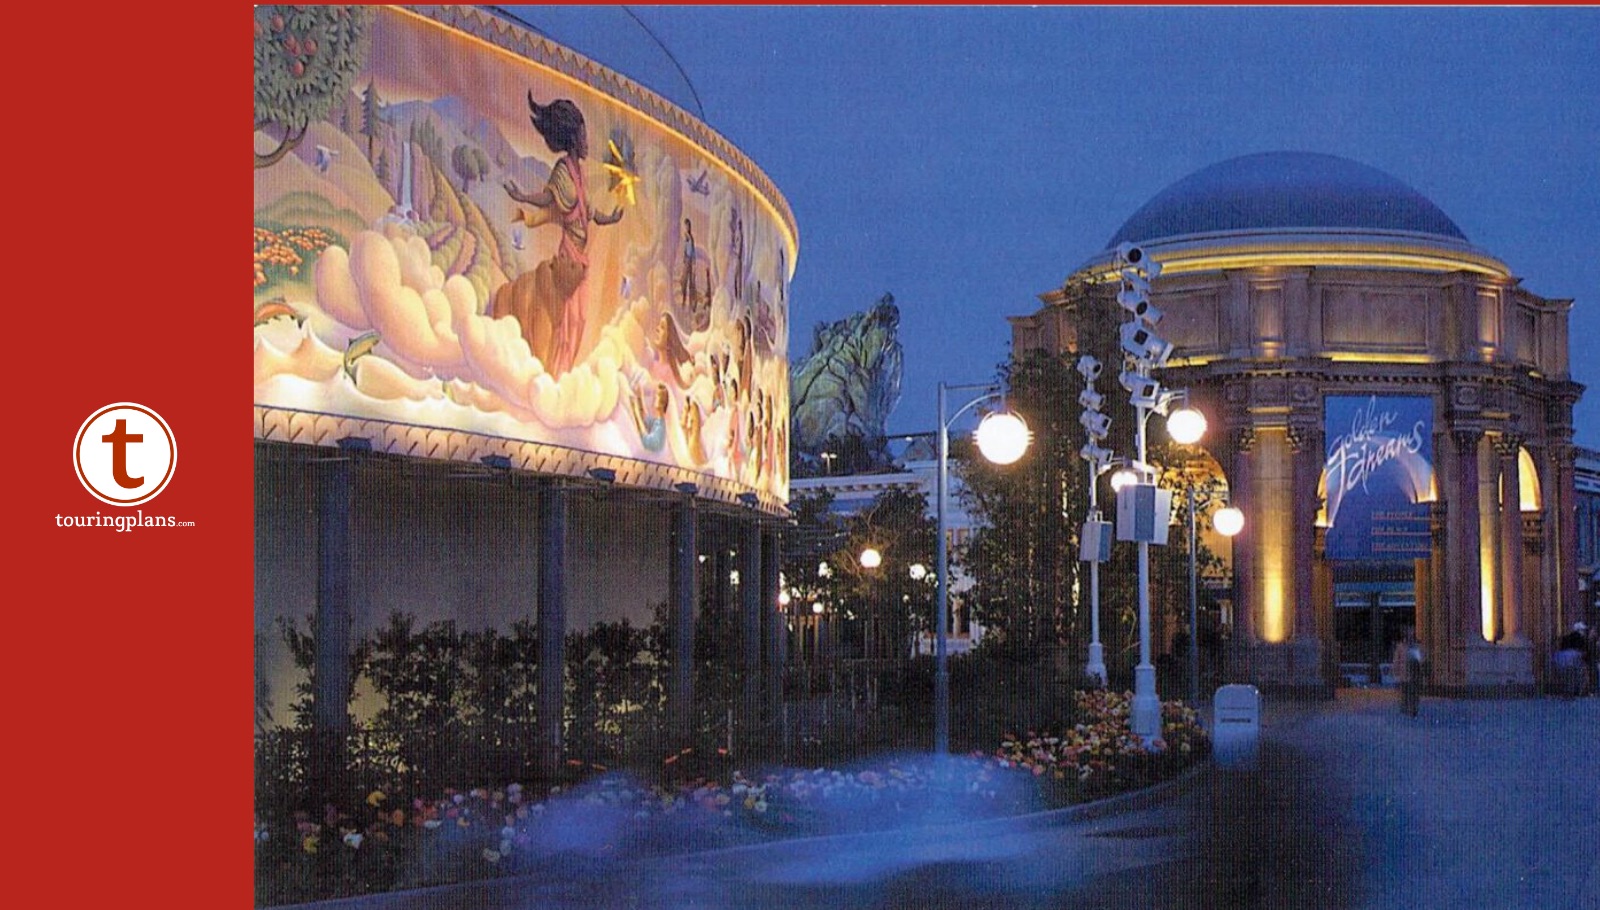 Vintage The Walt Disney World Main Street, U.S.A., Orlando, Florida Postcard